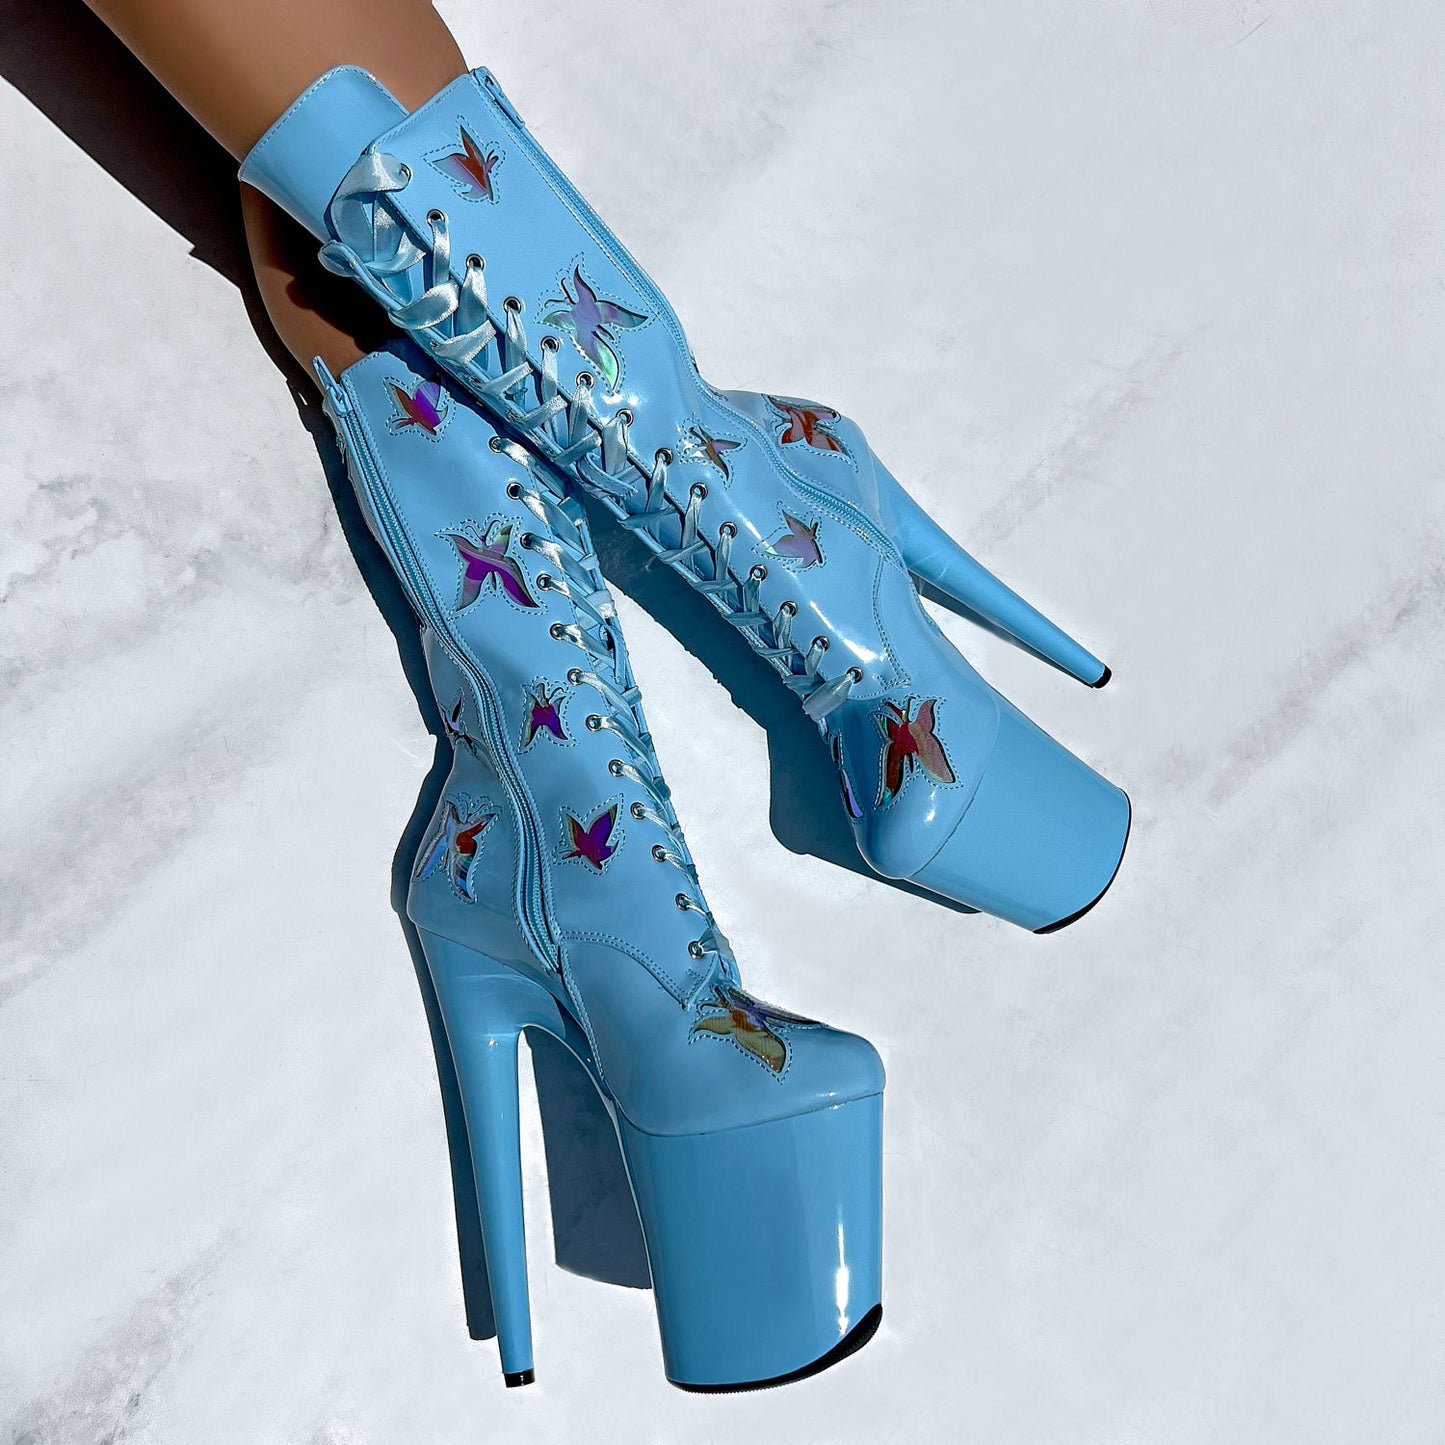 Butterfly Boot - Blue - 8 INCH, stripper shoe, stripper heel, pole heel, not a pleaser, platform, dancer, pole dance, floor work